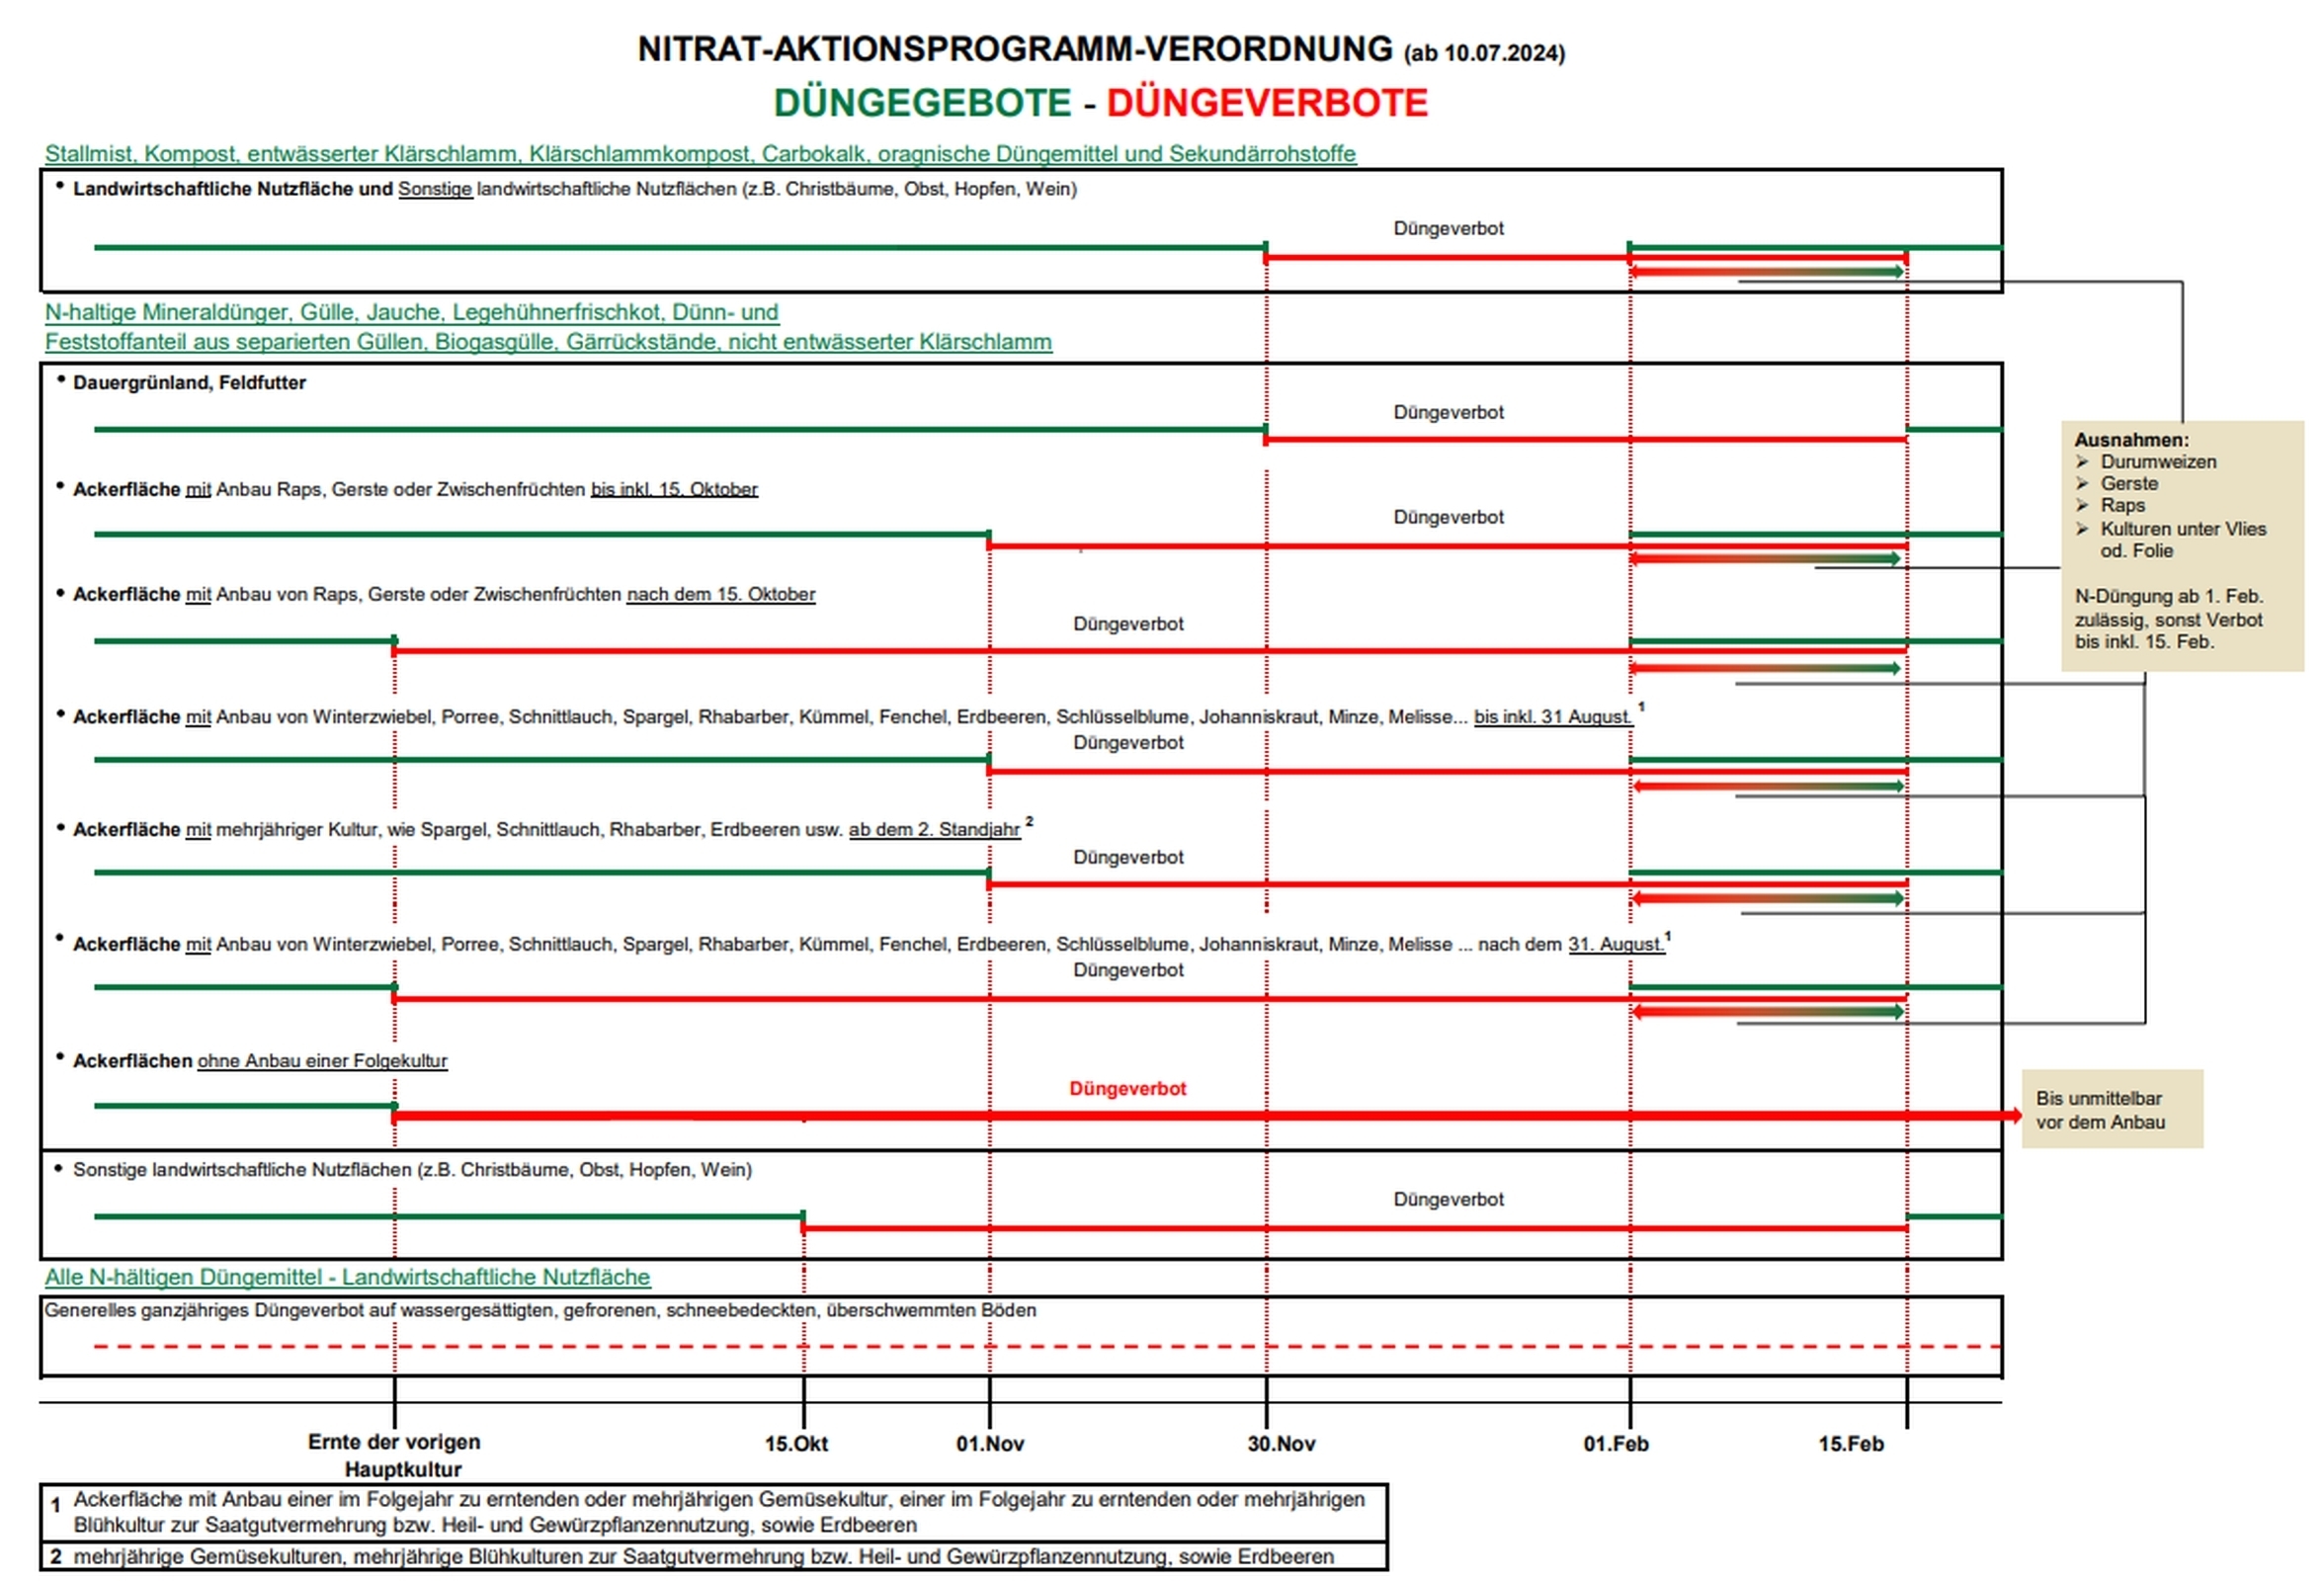 Nitrat-Aktionsprogramm-Verordnung - Düngegebote - Düngeverbote Stand 10.07.2024.jpg